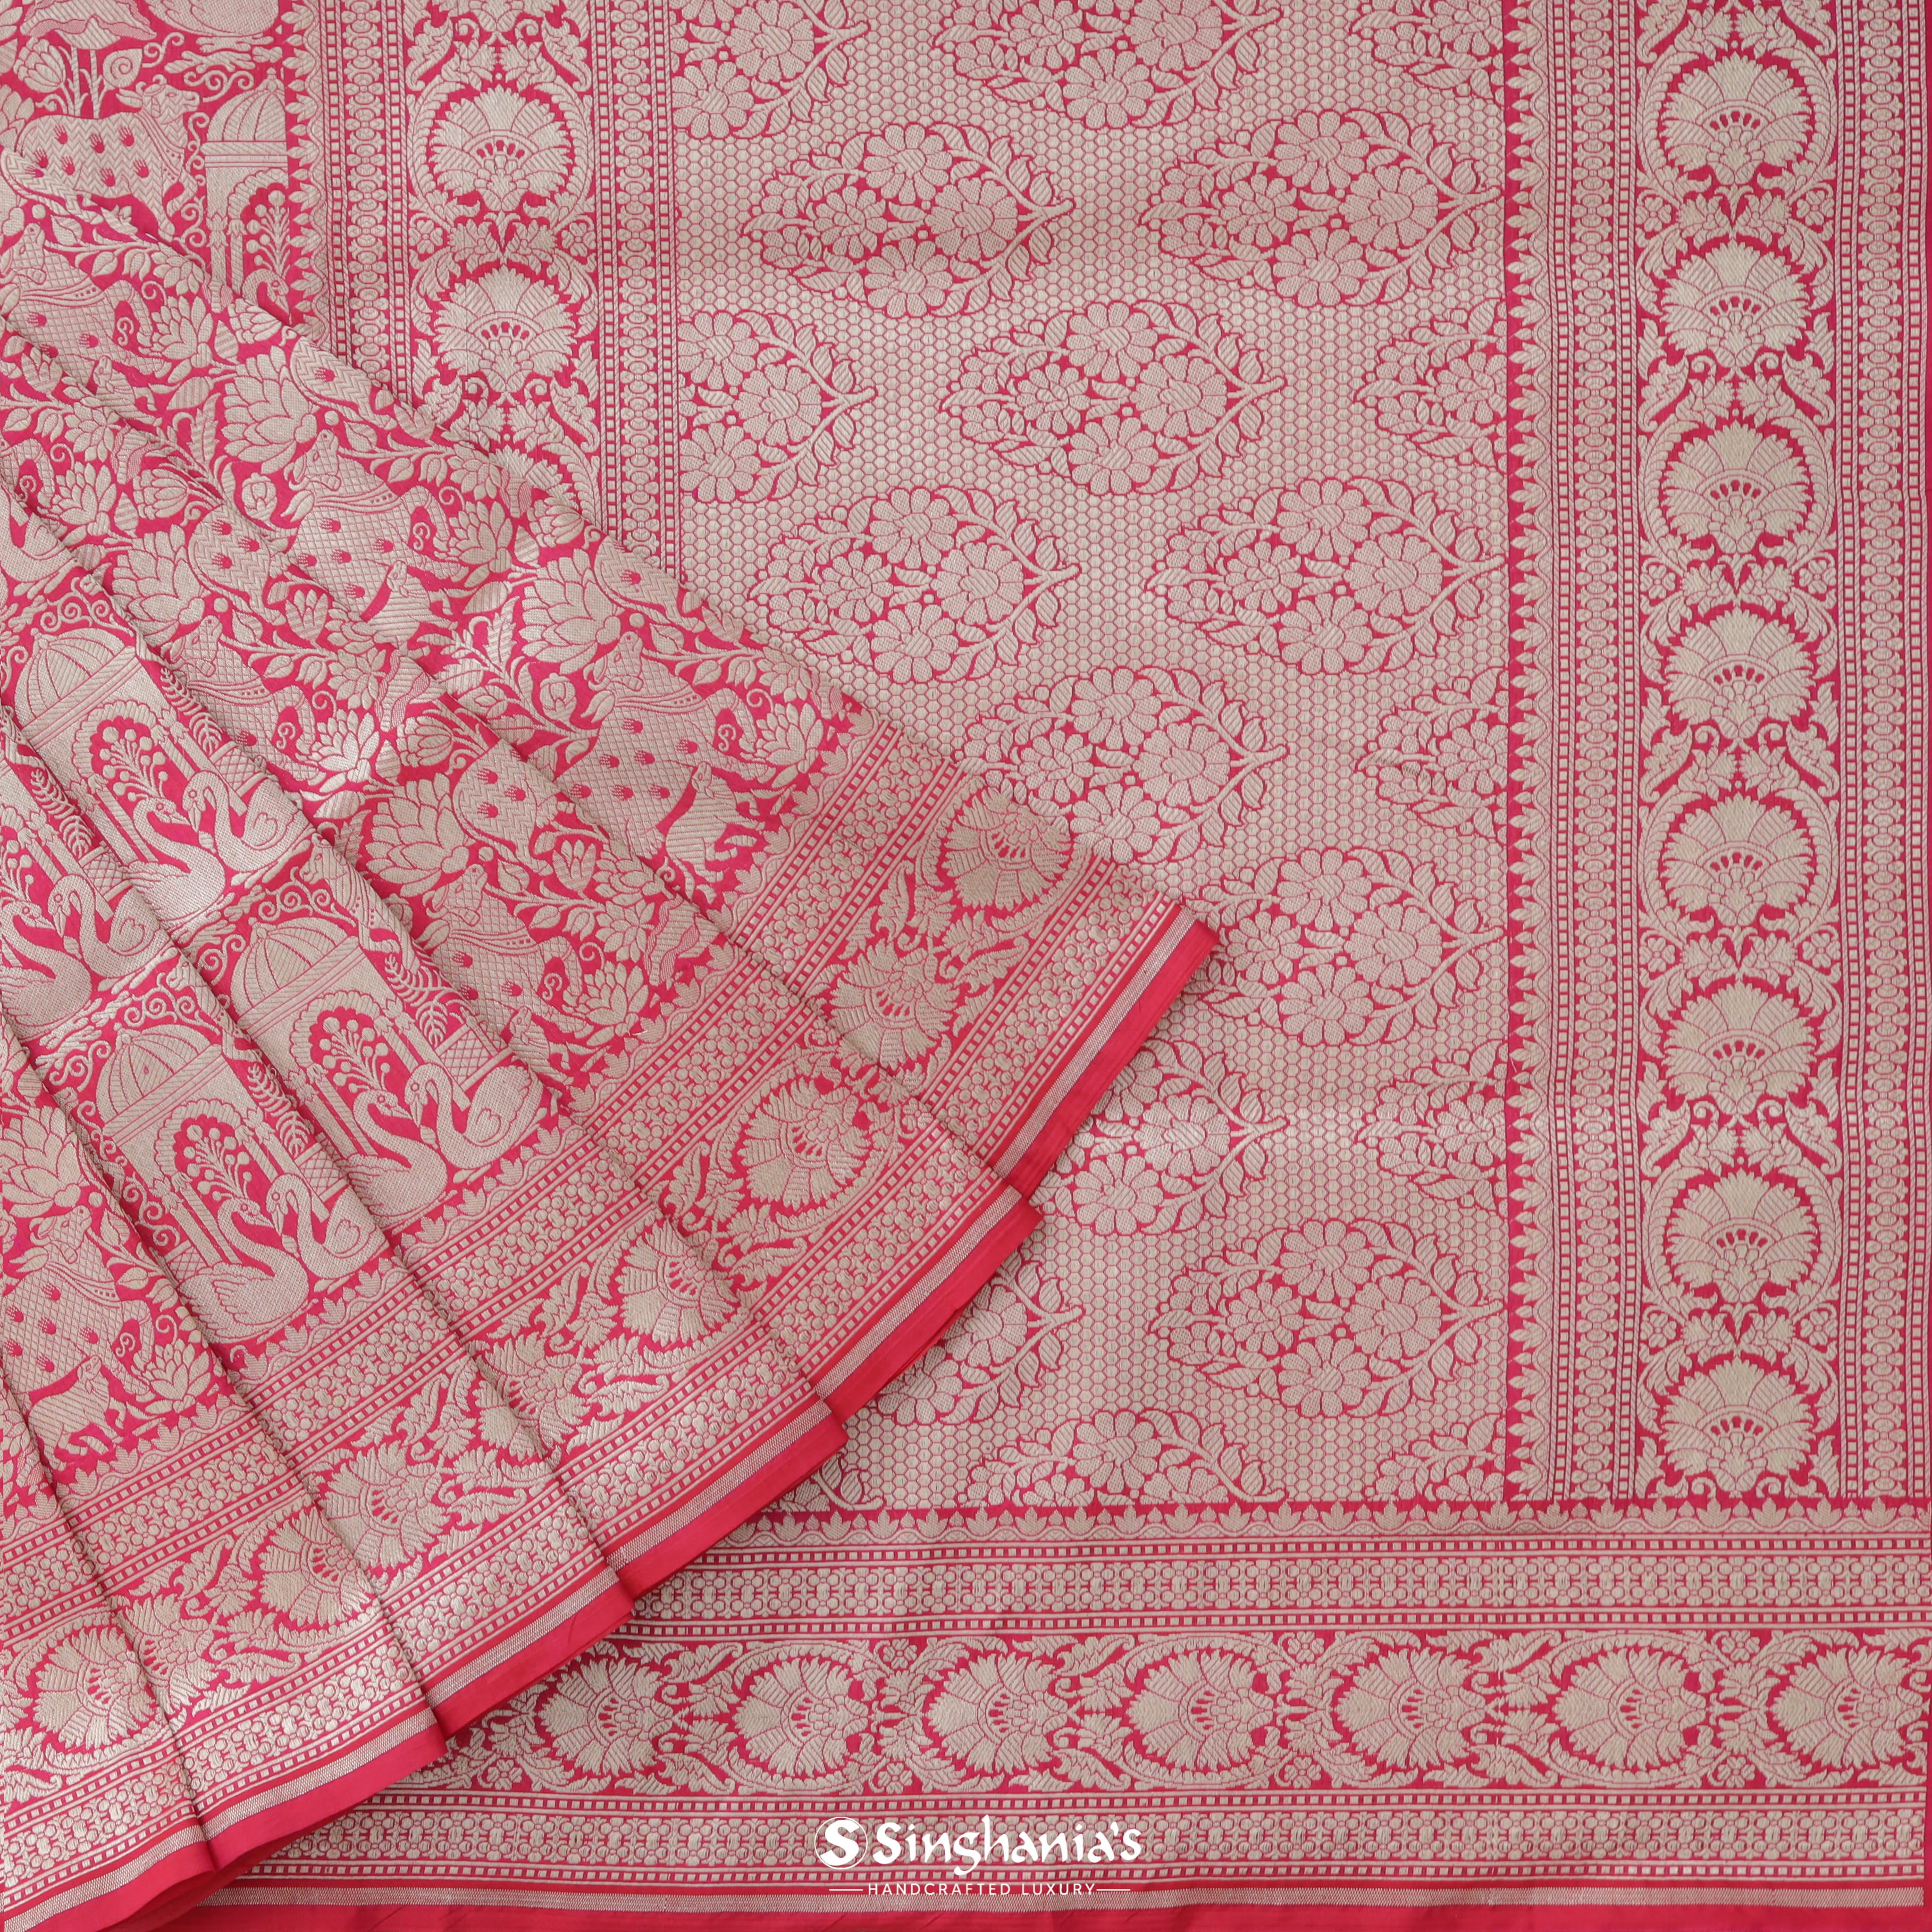 Hot Pink Silk Banarasi Saree With Nature Inspired Motif Pattern